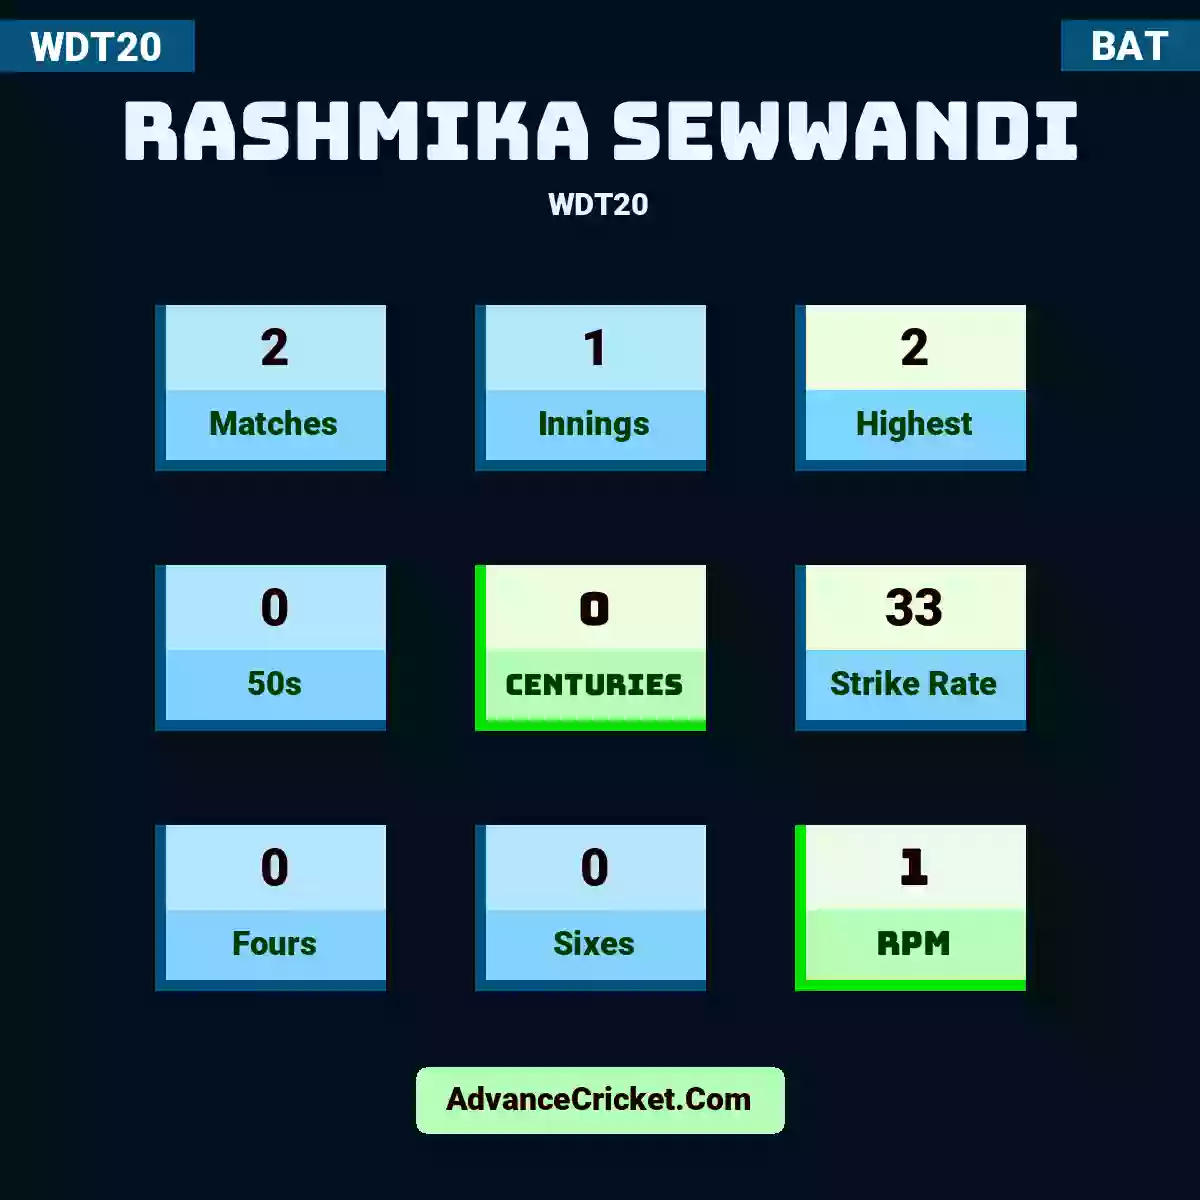 Rashmika Sewwandi WDT20 , Rashmika Sewwandi played 2 matches, scored 2 runs as highest, 0 half-centuries, and 0 centuries, with a strike rate of 33. R.Sewwandi hit 0 fours and 0 sixes, with an RPM of 1.